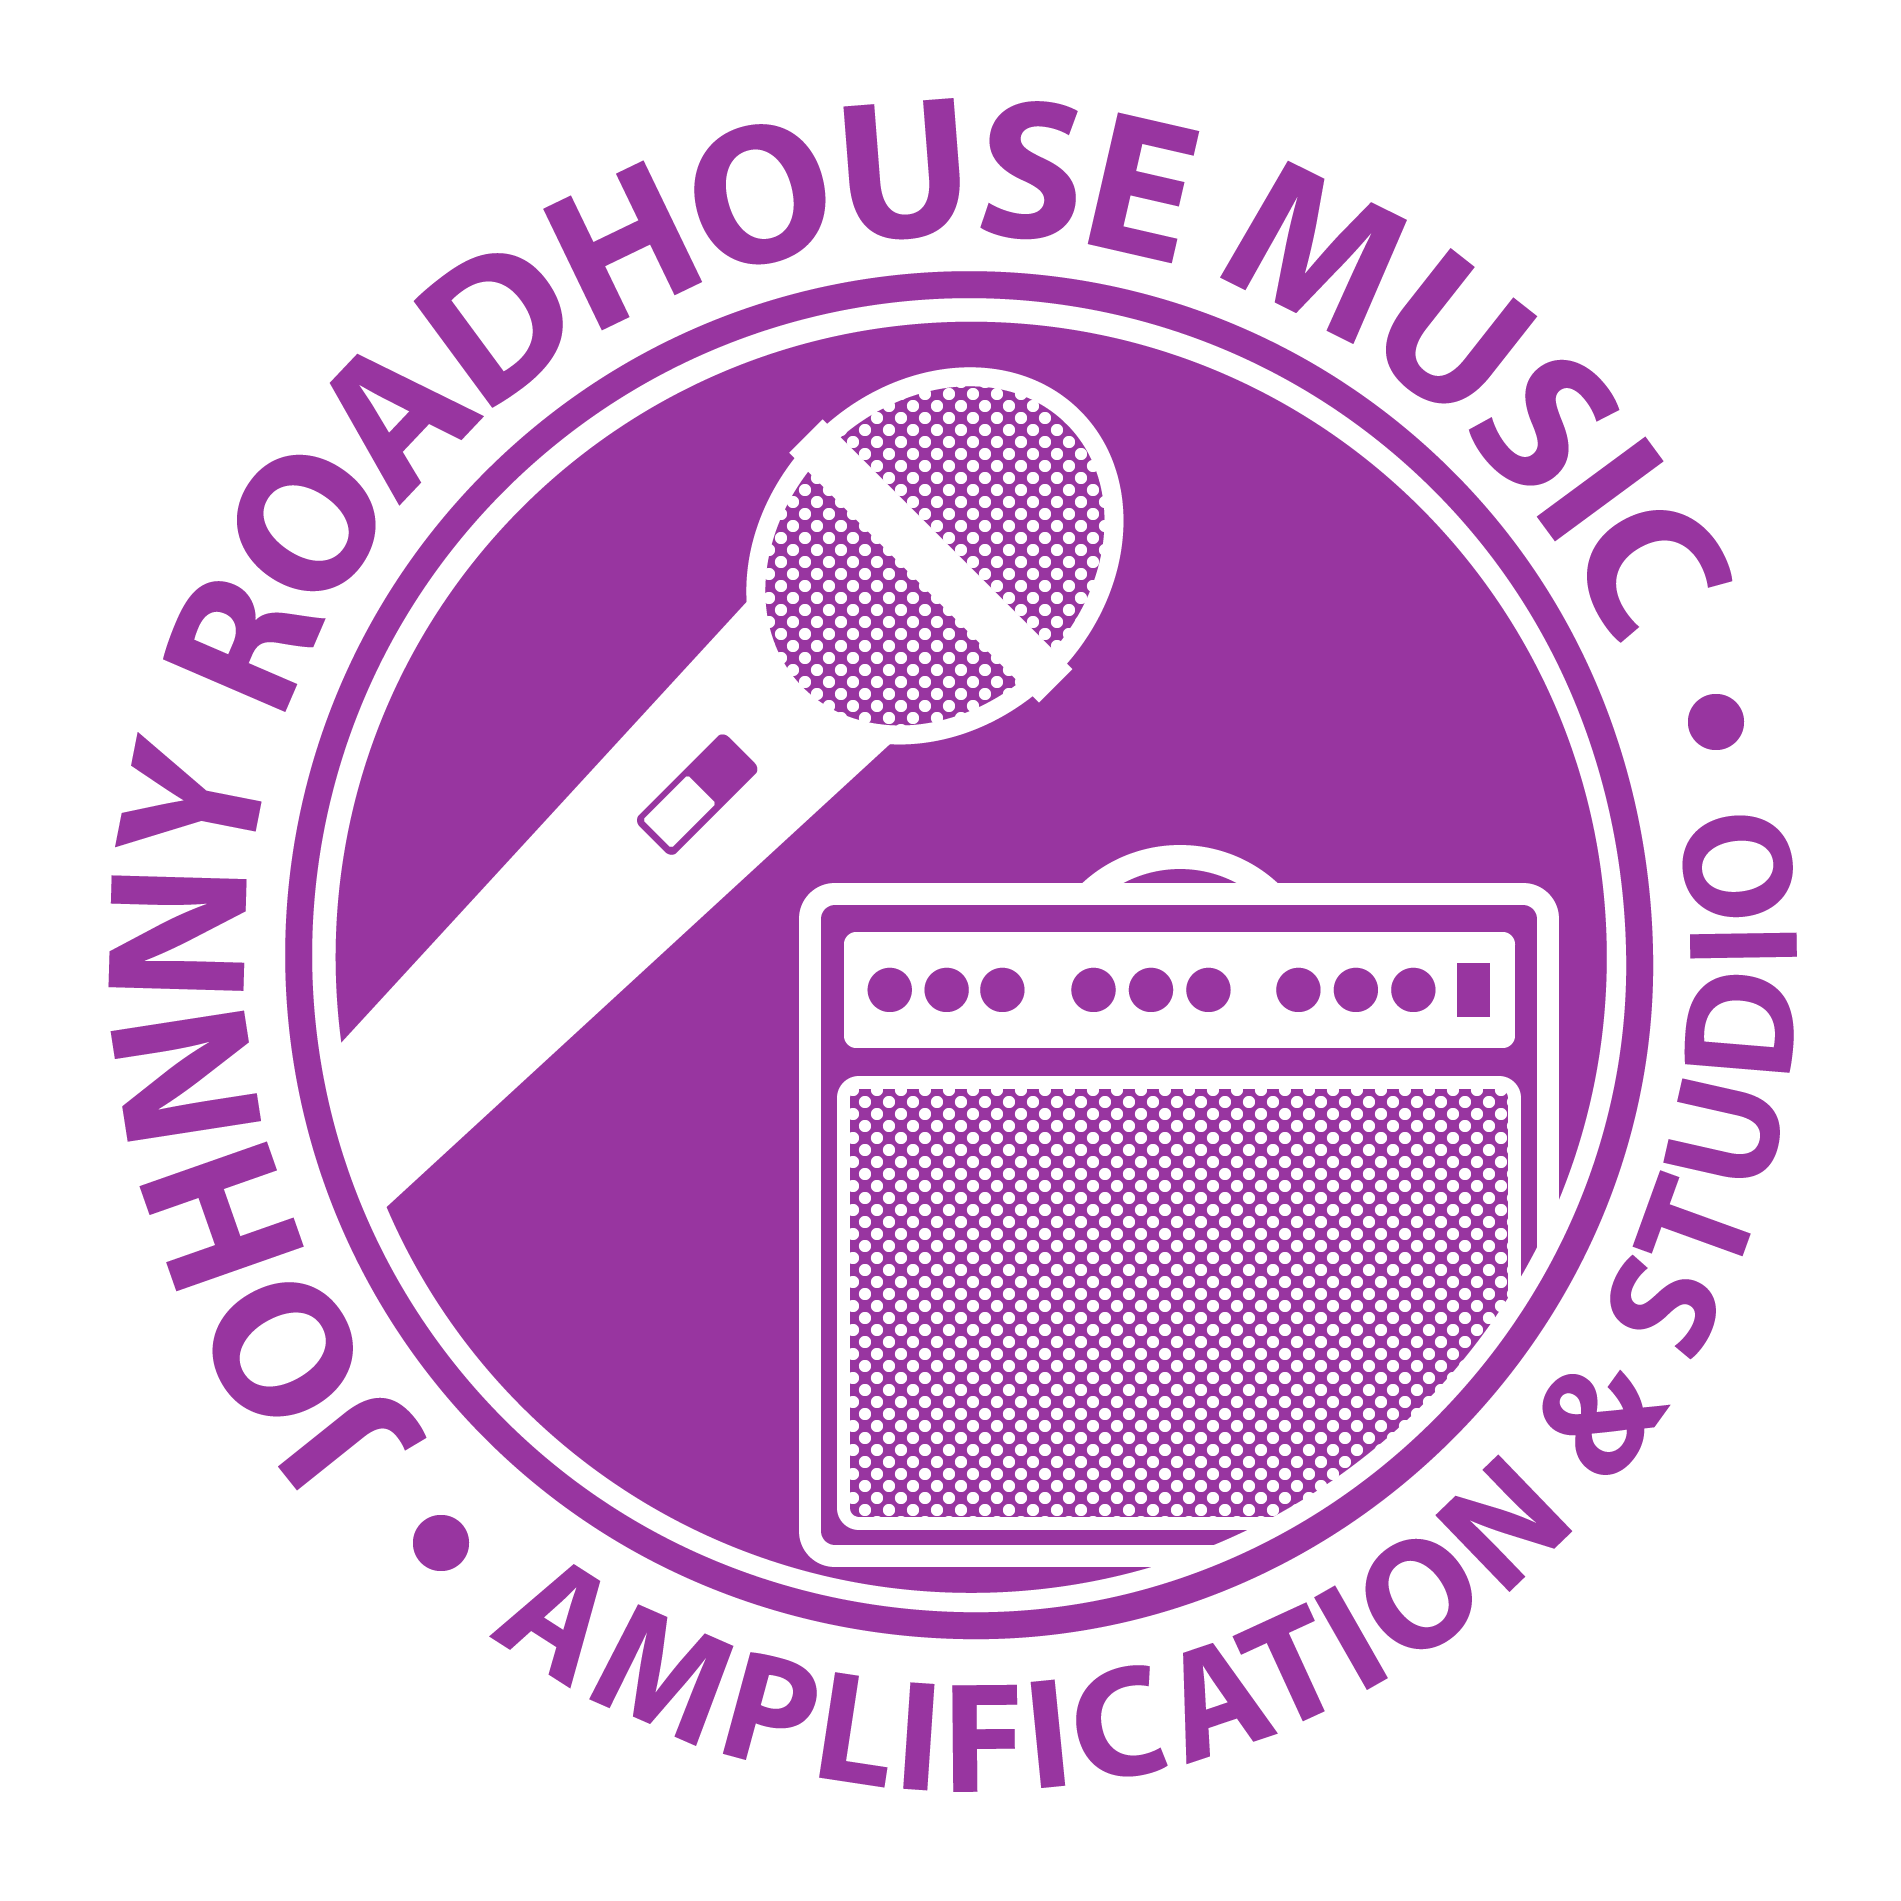 Johnny Roadhouse Music - Amplification & Studio Department